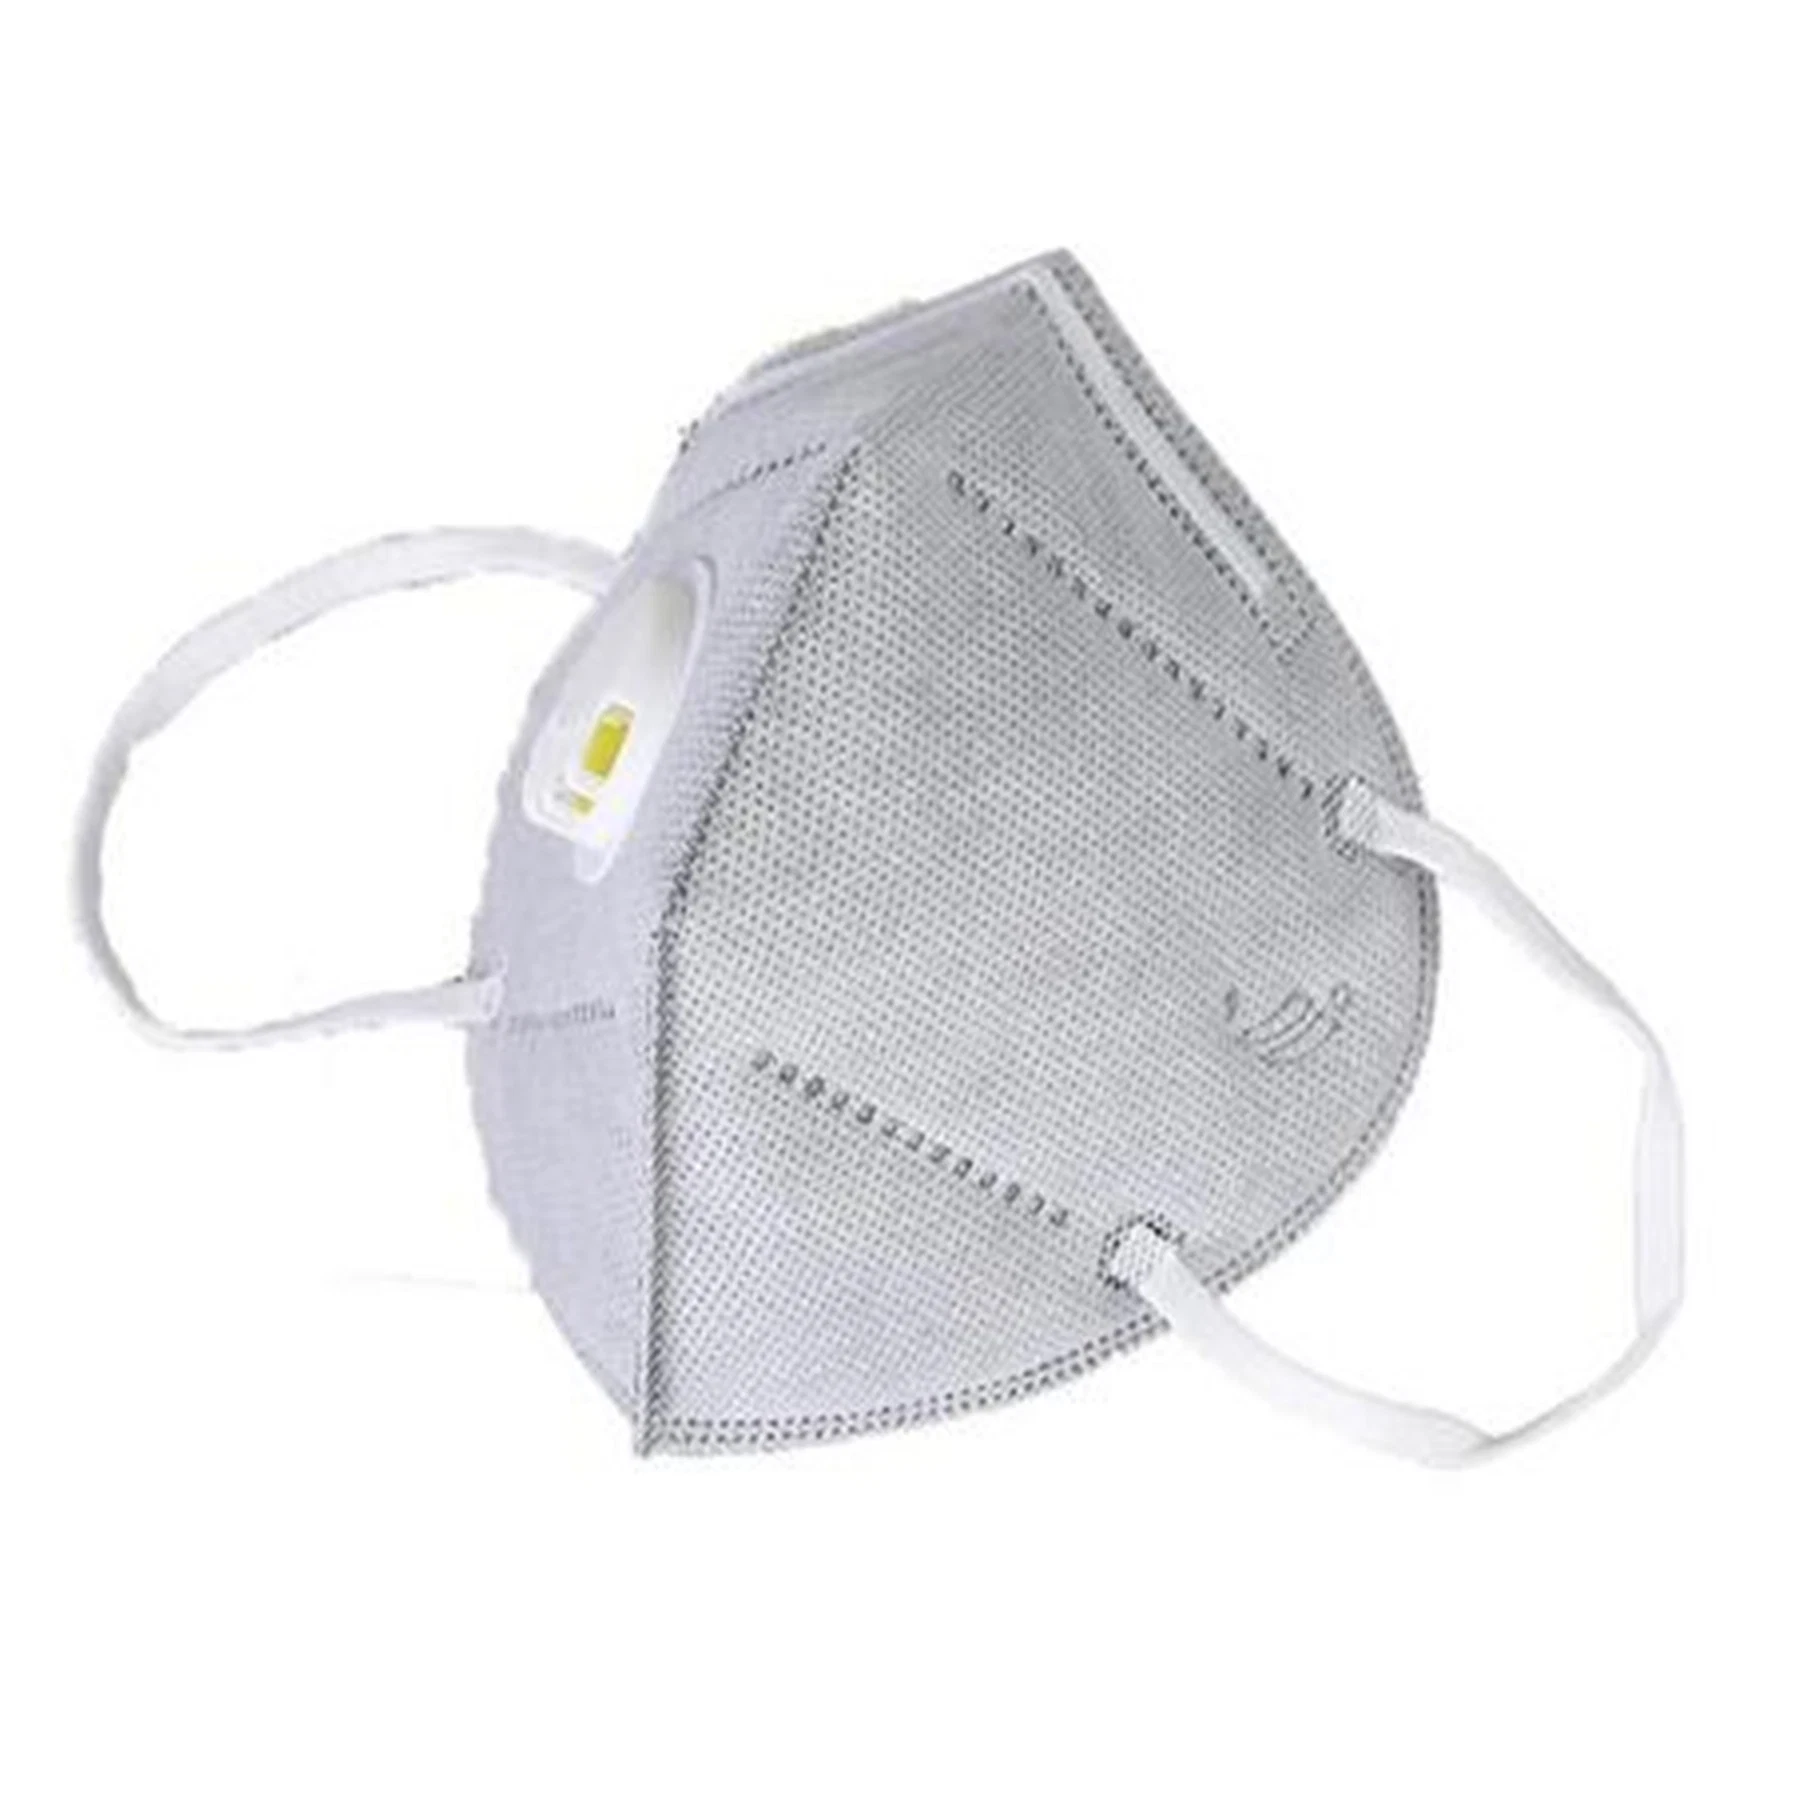 Disposable Safety Protective Face Mask Respirator